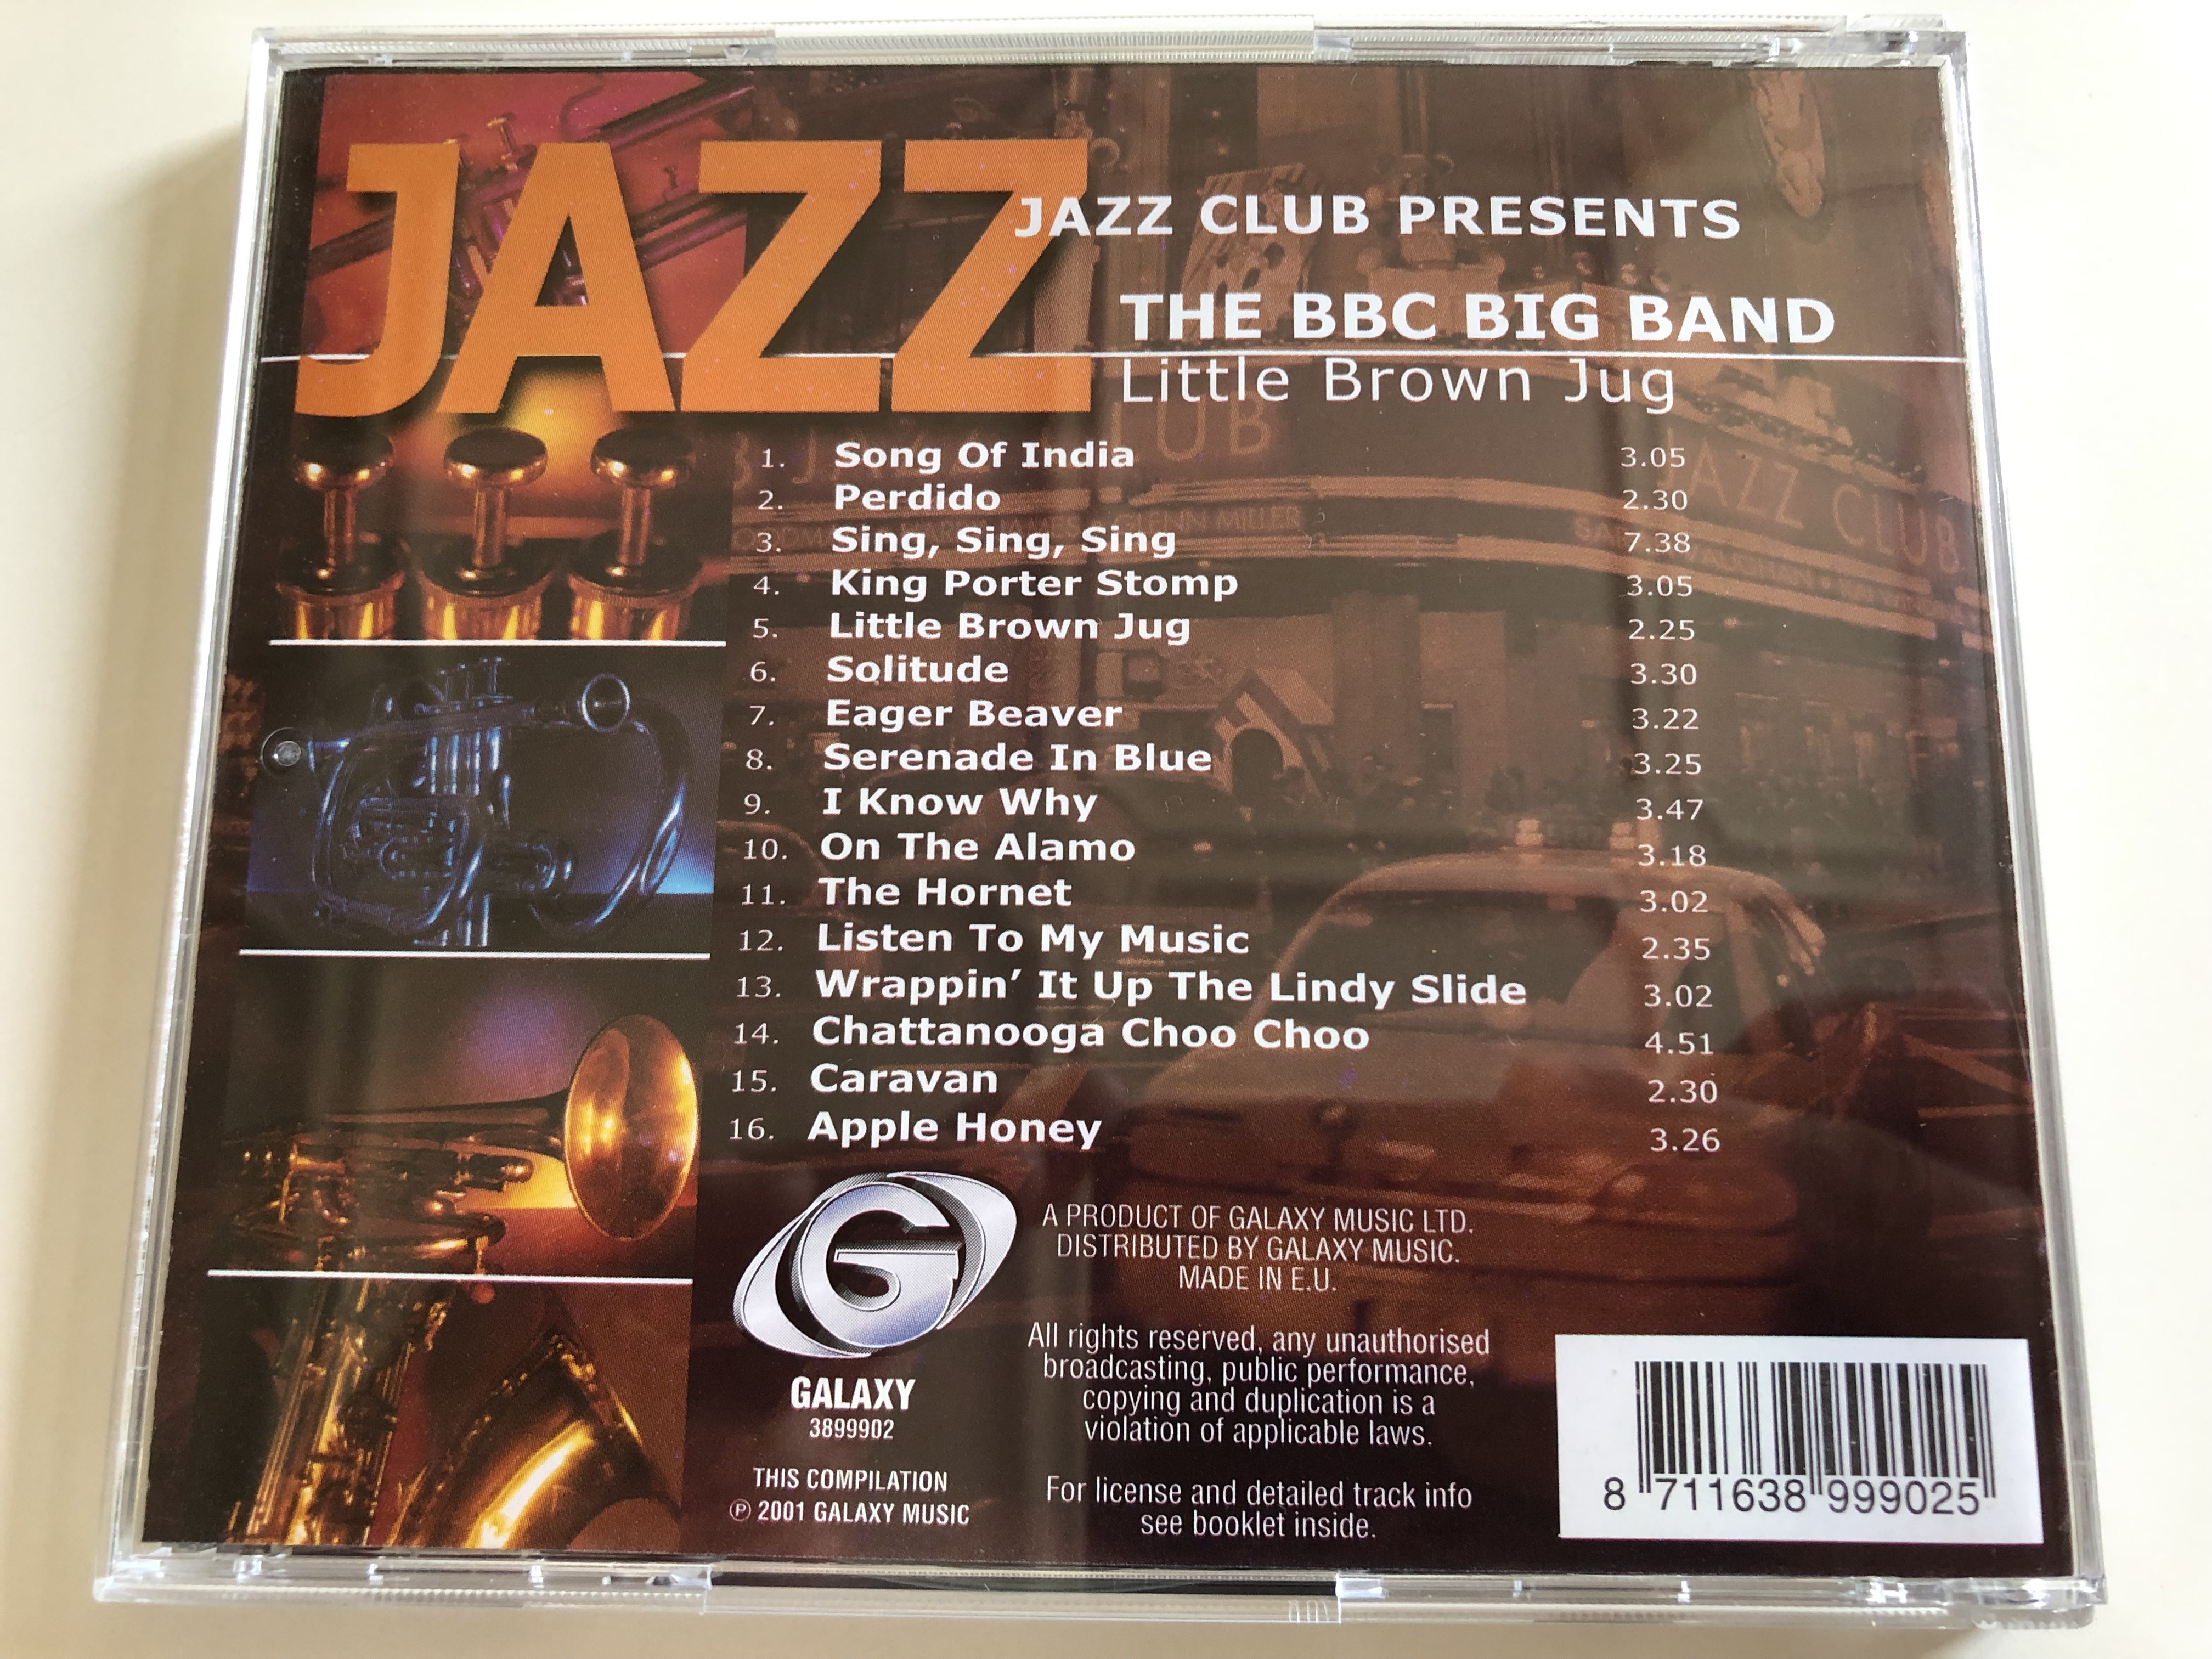 jazz-club-presents-the-bbc-big-band-little-brown-jug-galaxy-music-audio-cd-2001-3899902-4-.jpg